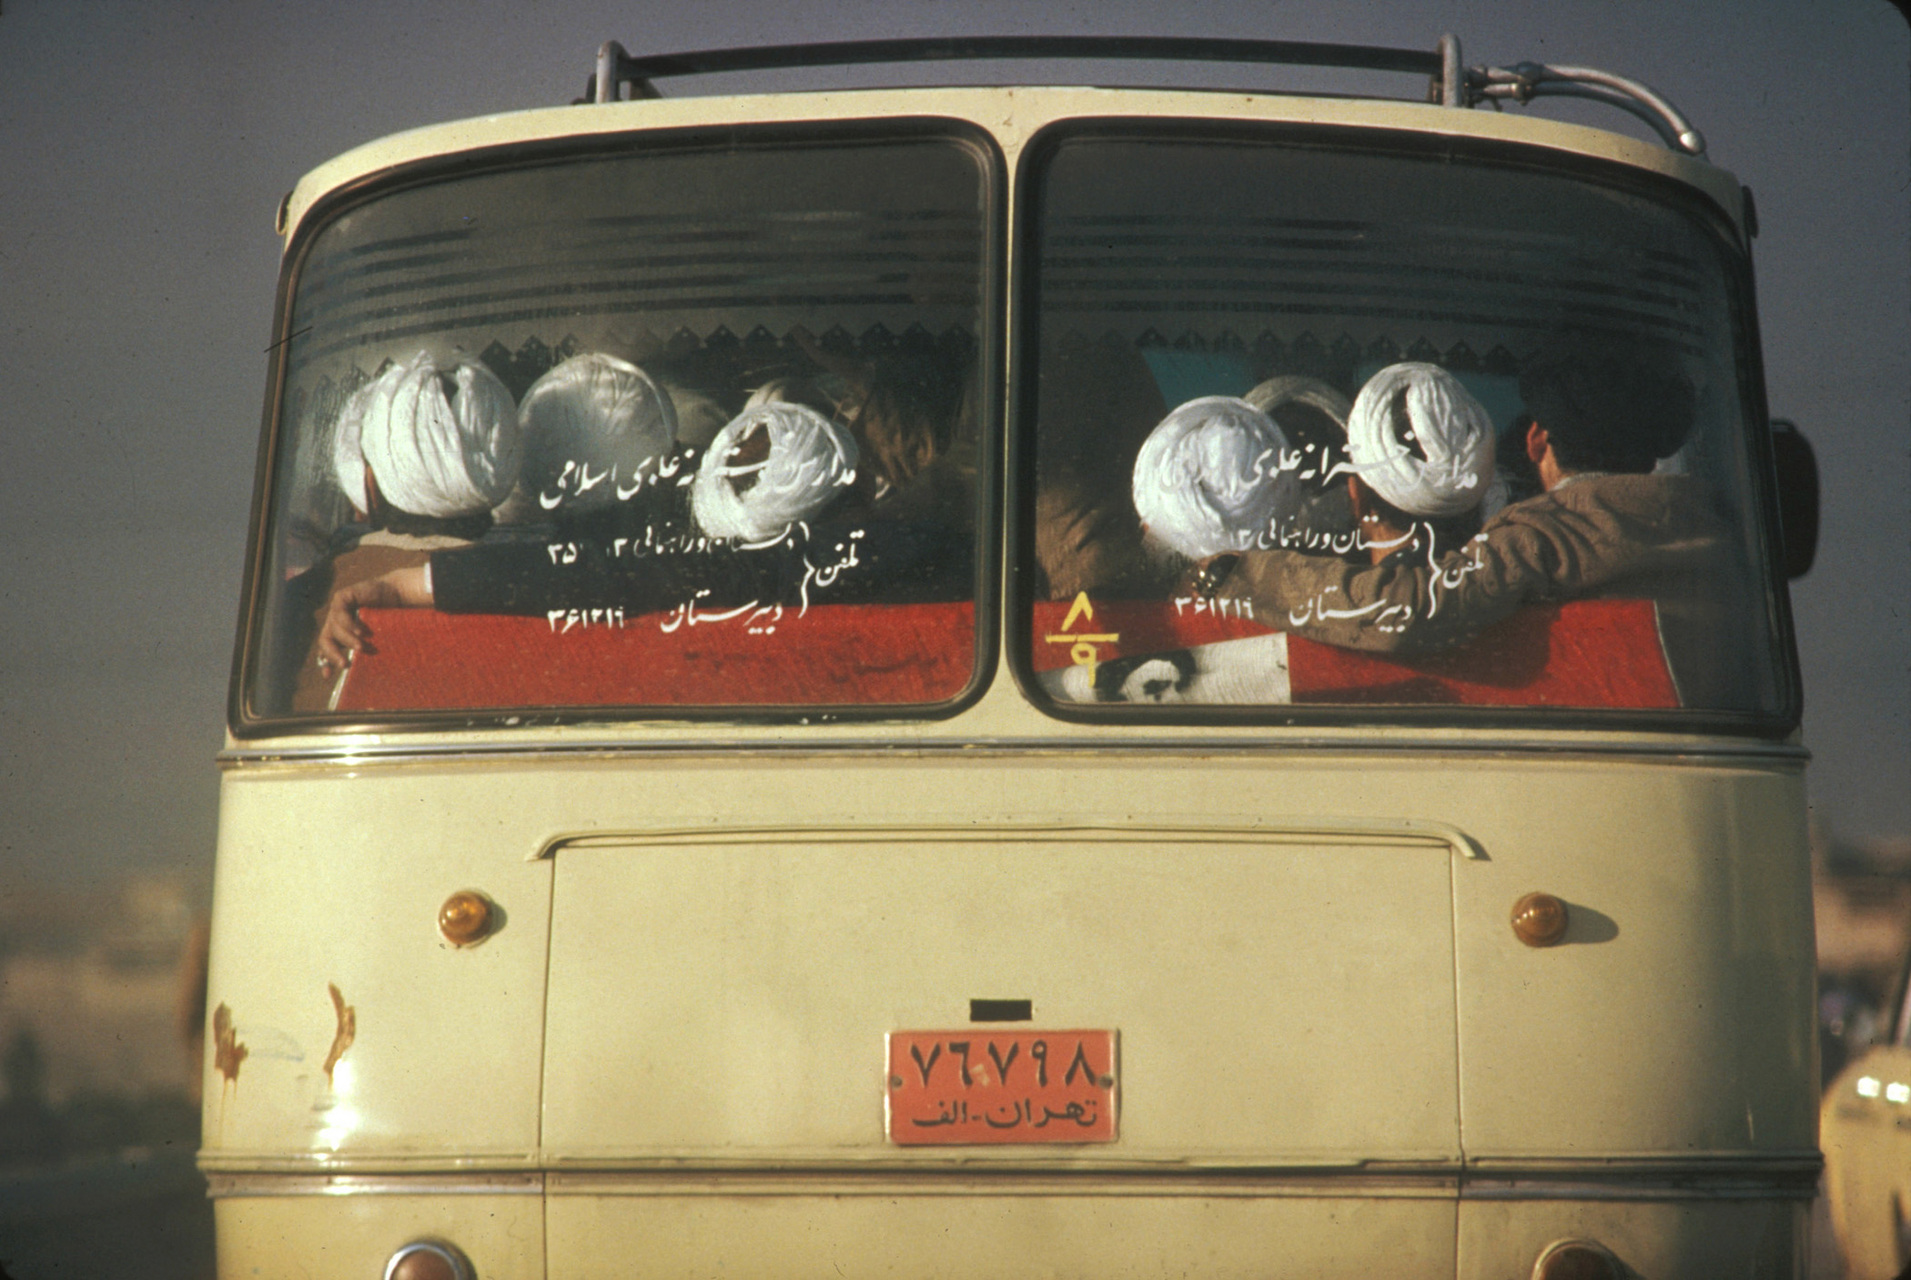 Each week the mullahs' influence grew. : 44 Days: the Iranian Revolution : David Burnett | Photographer